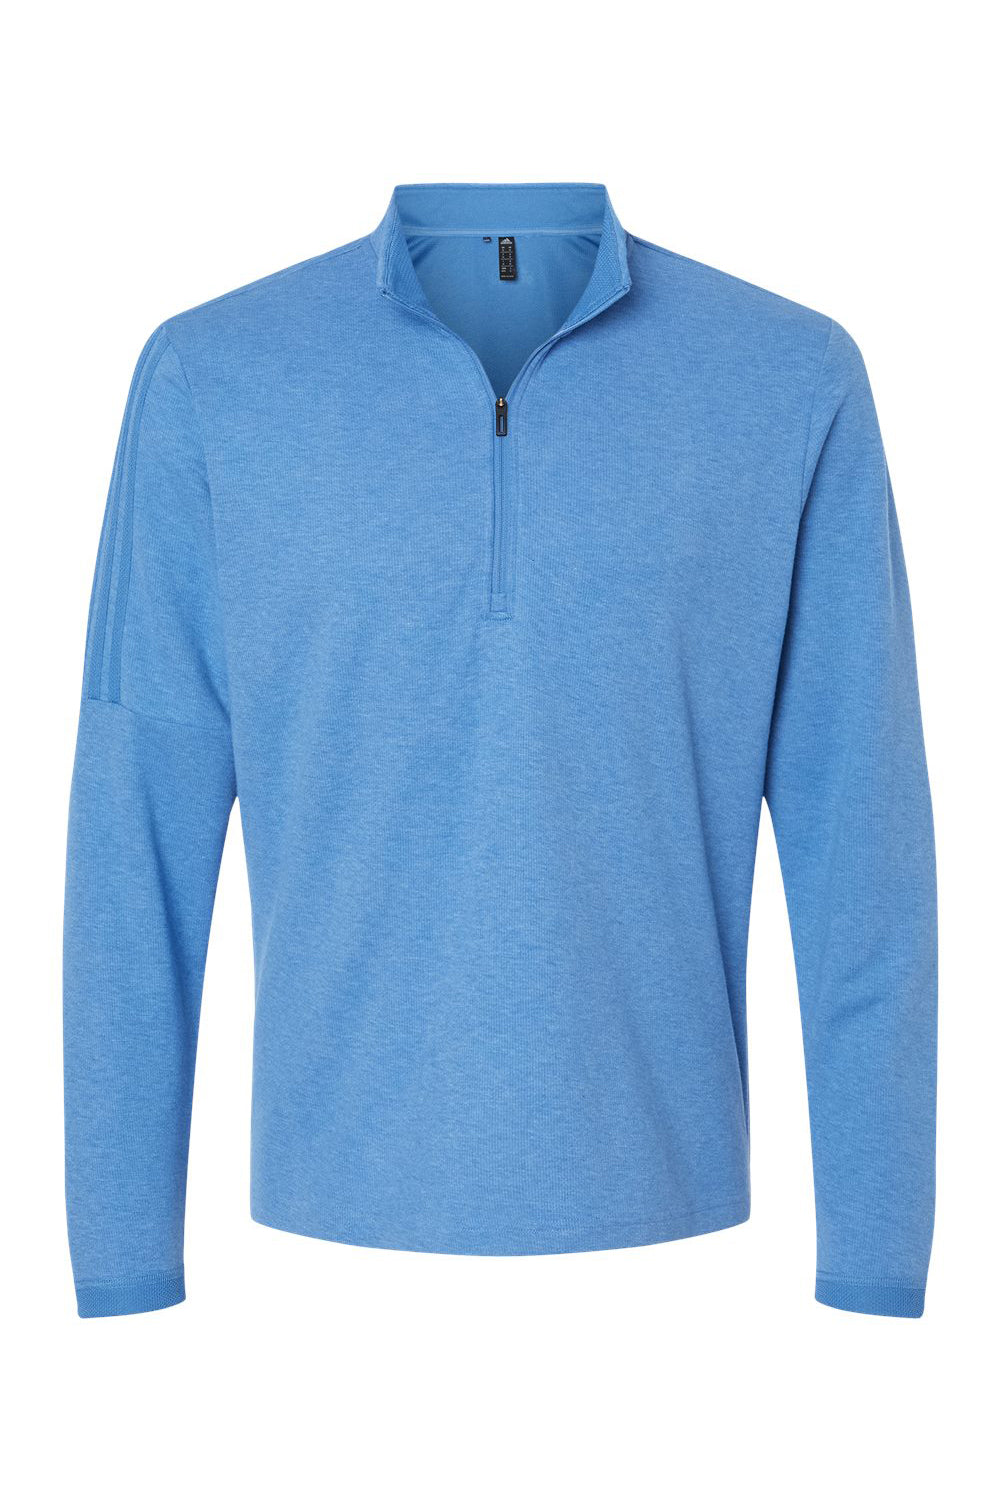 Adidas A554 Mens 3 Stripes 1/4 Zip Sweater Focus Blue Melange Flat Front